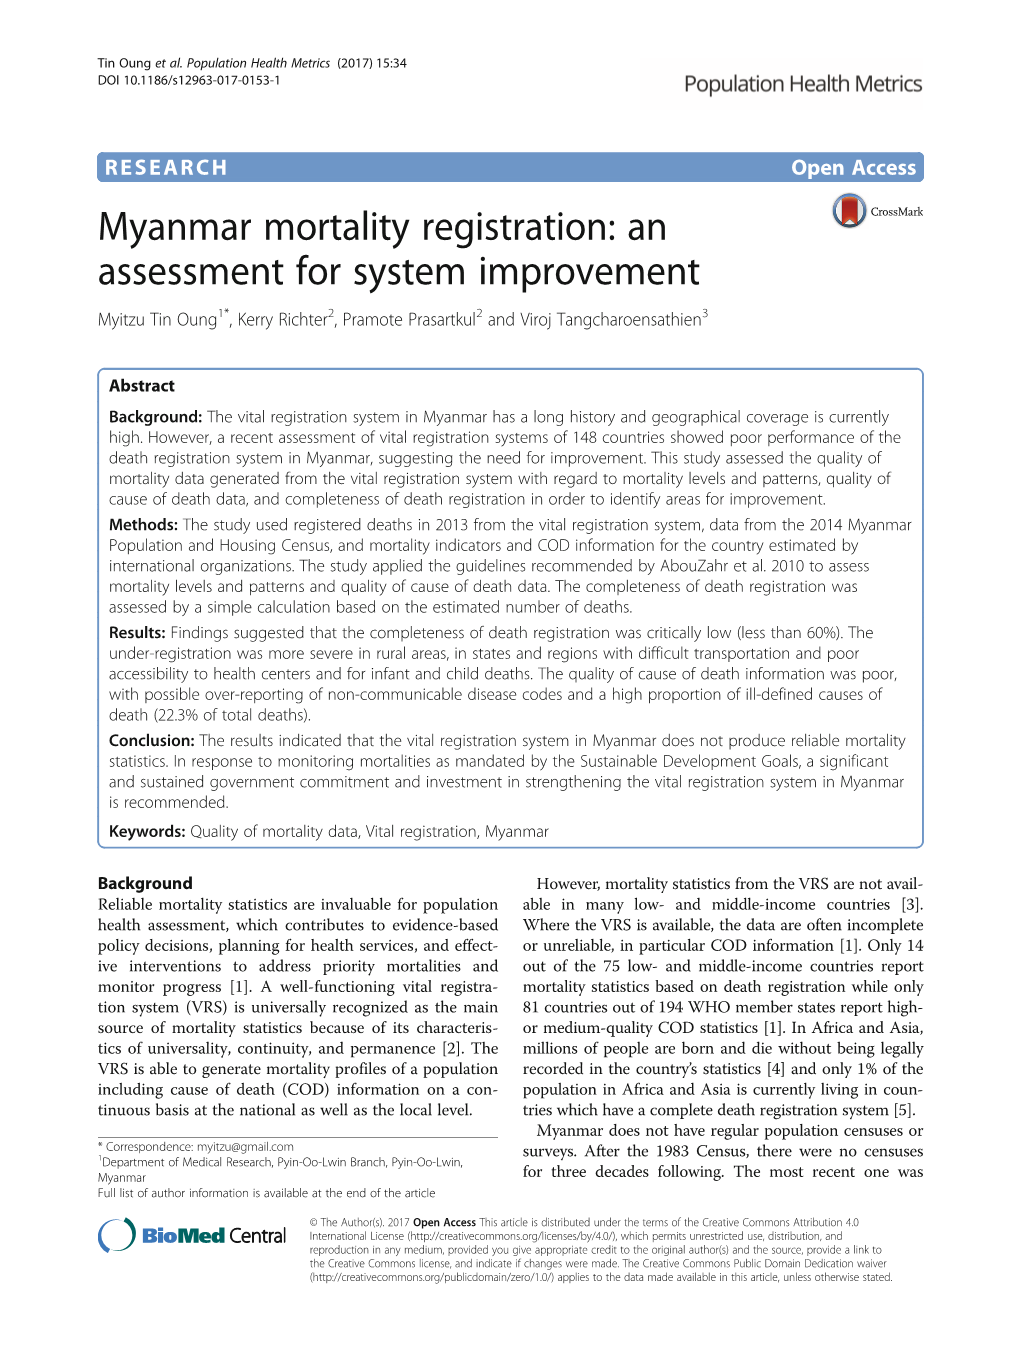 Myanmar Mortality Registration: an Assessment for System Improvement Myitzu Tin Oung1*, Kerry Richter2, Pramote Prasartkul2 and Viroj Tangcharoensathien3